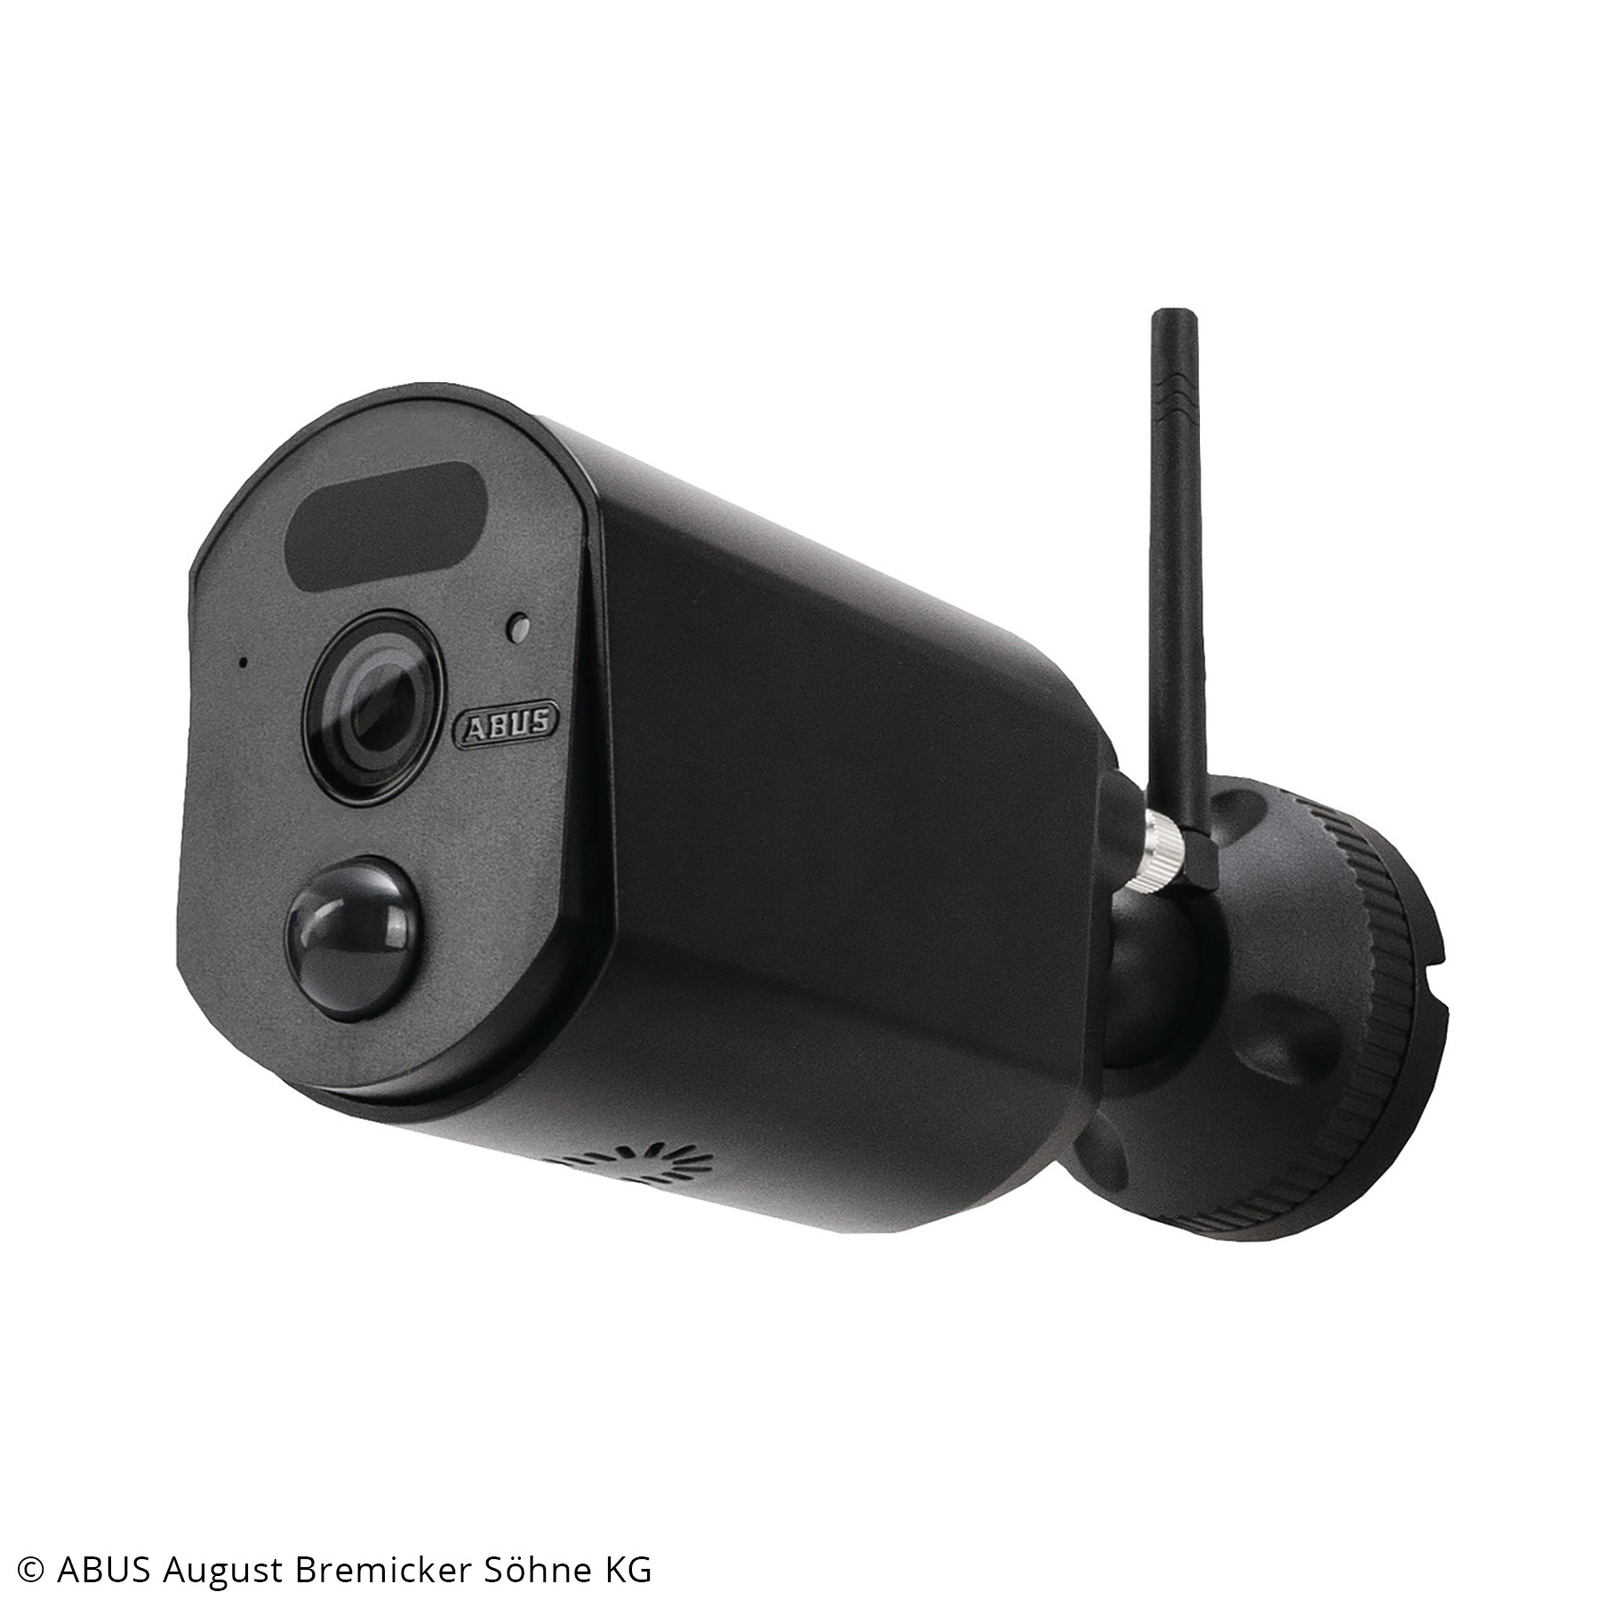 ABUS auxiliary camera for EasyLook BasicSet